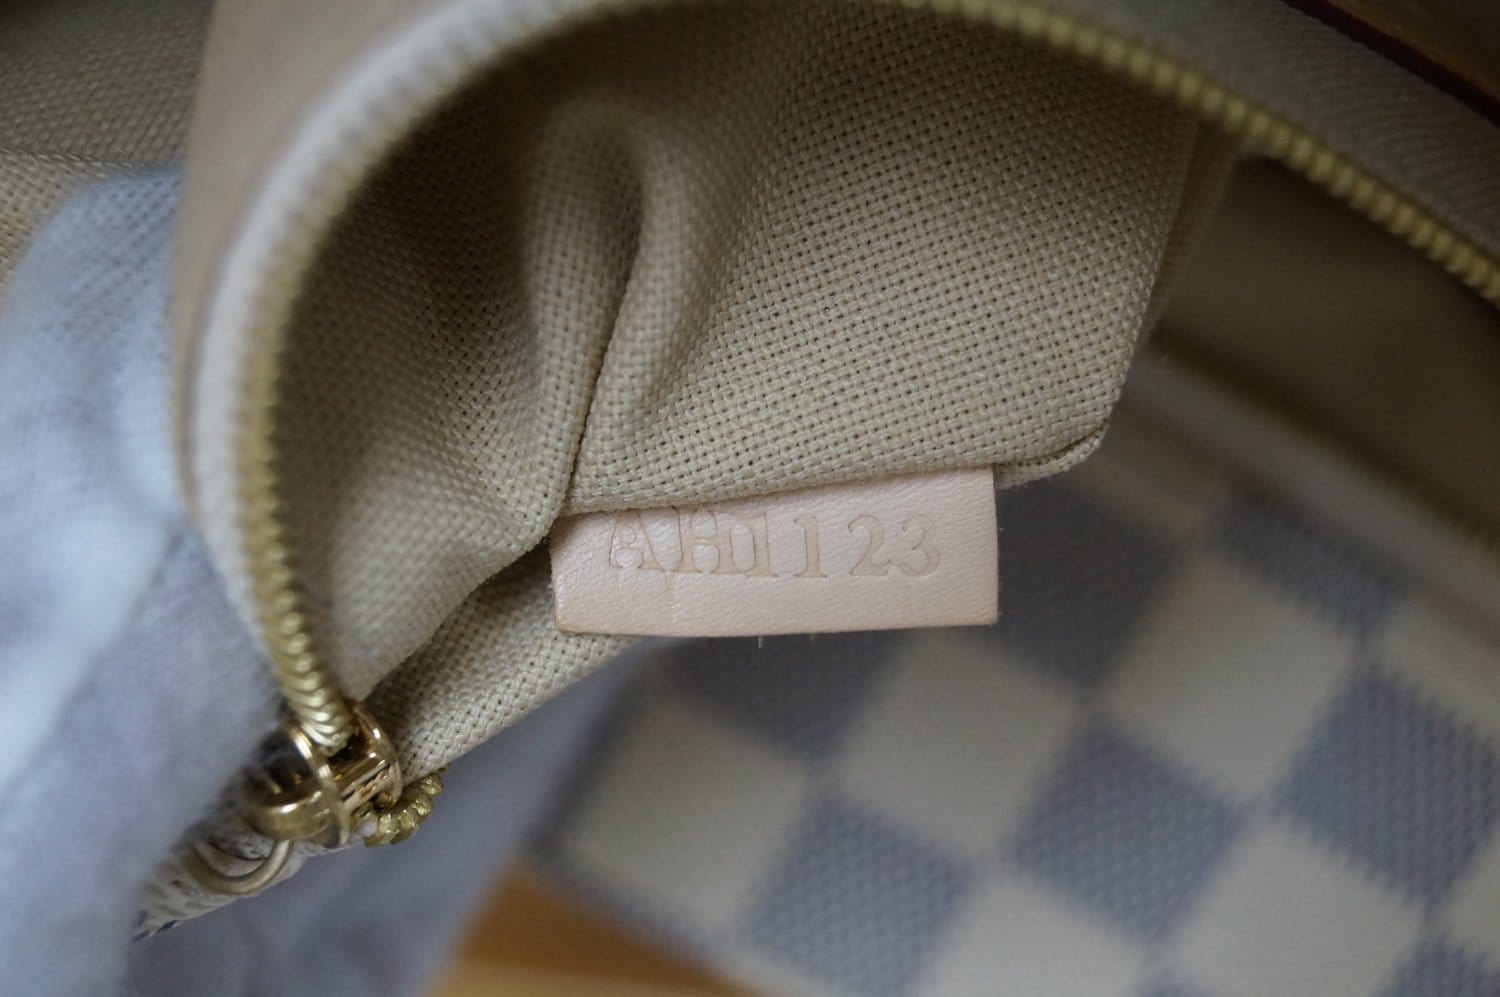 Louis Vuitton Soffi Handbag Damier White 1842271